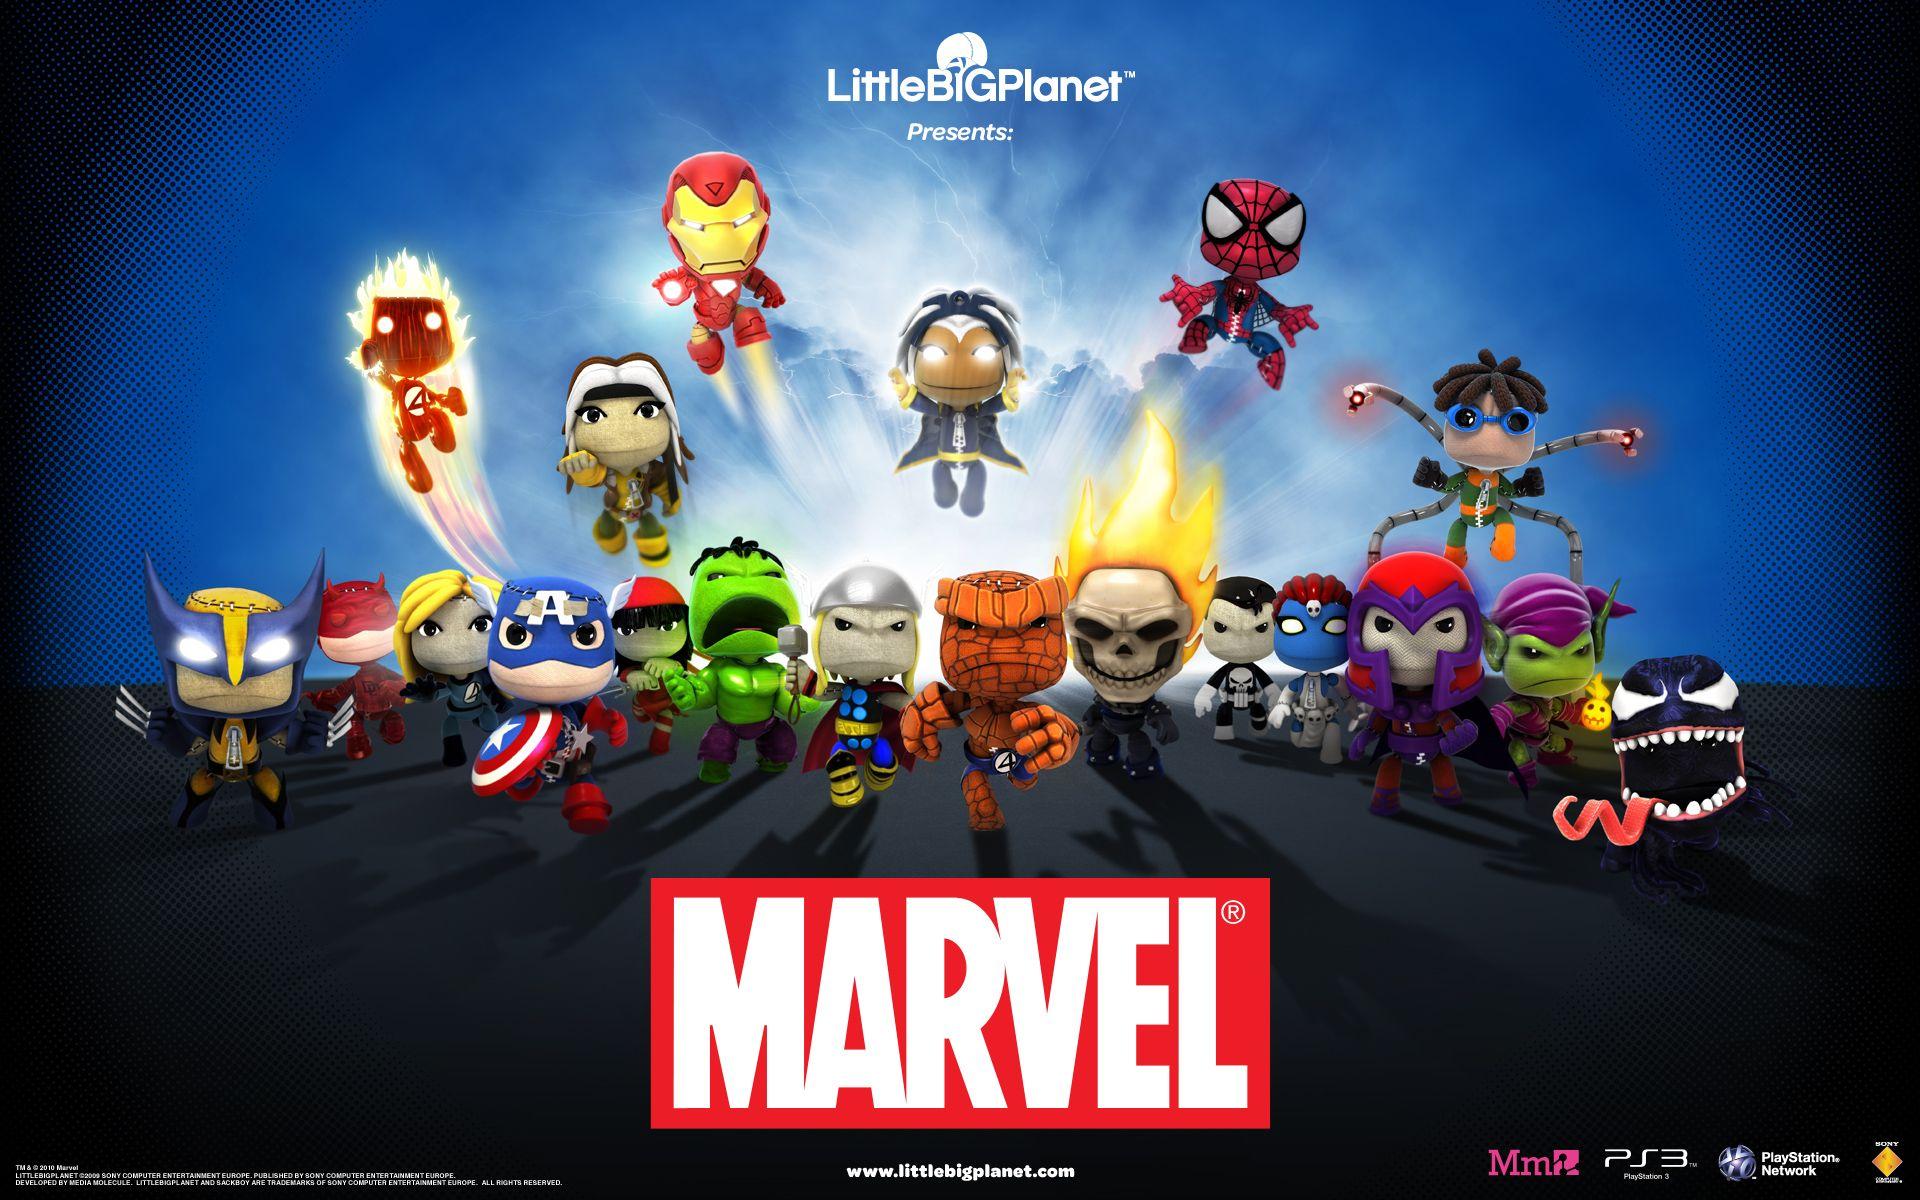 LittleBigPlanet's Marvel DLC Leaving PSN on Dec 31; Super Sale